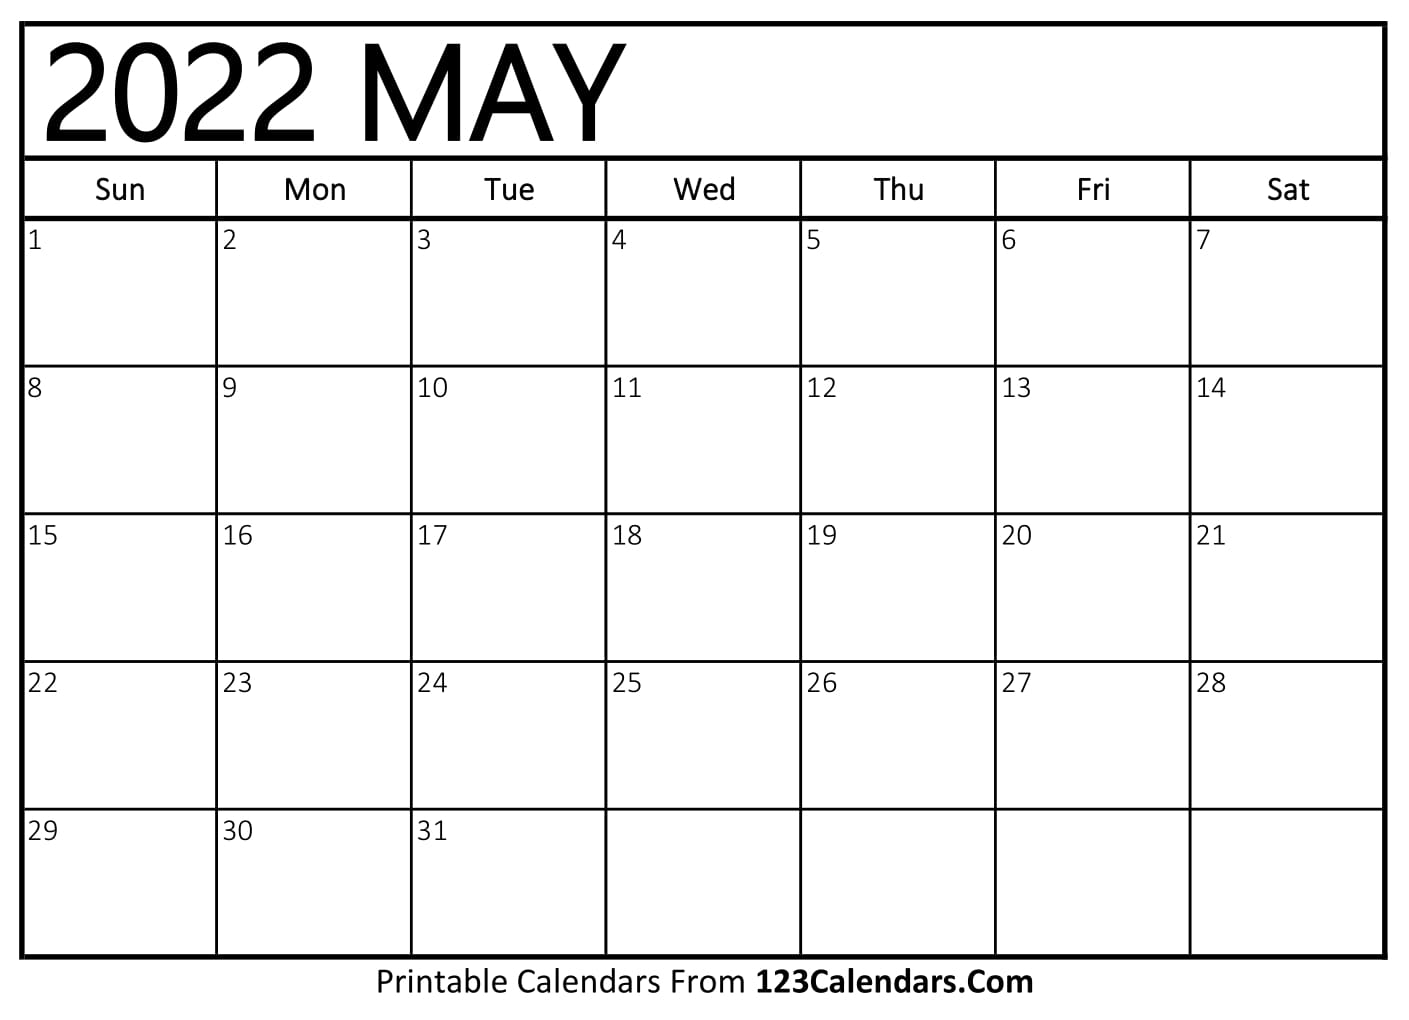 Printable Calendar 2022 May Printable May 2022 Calendar Templates - 123Calendars.com